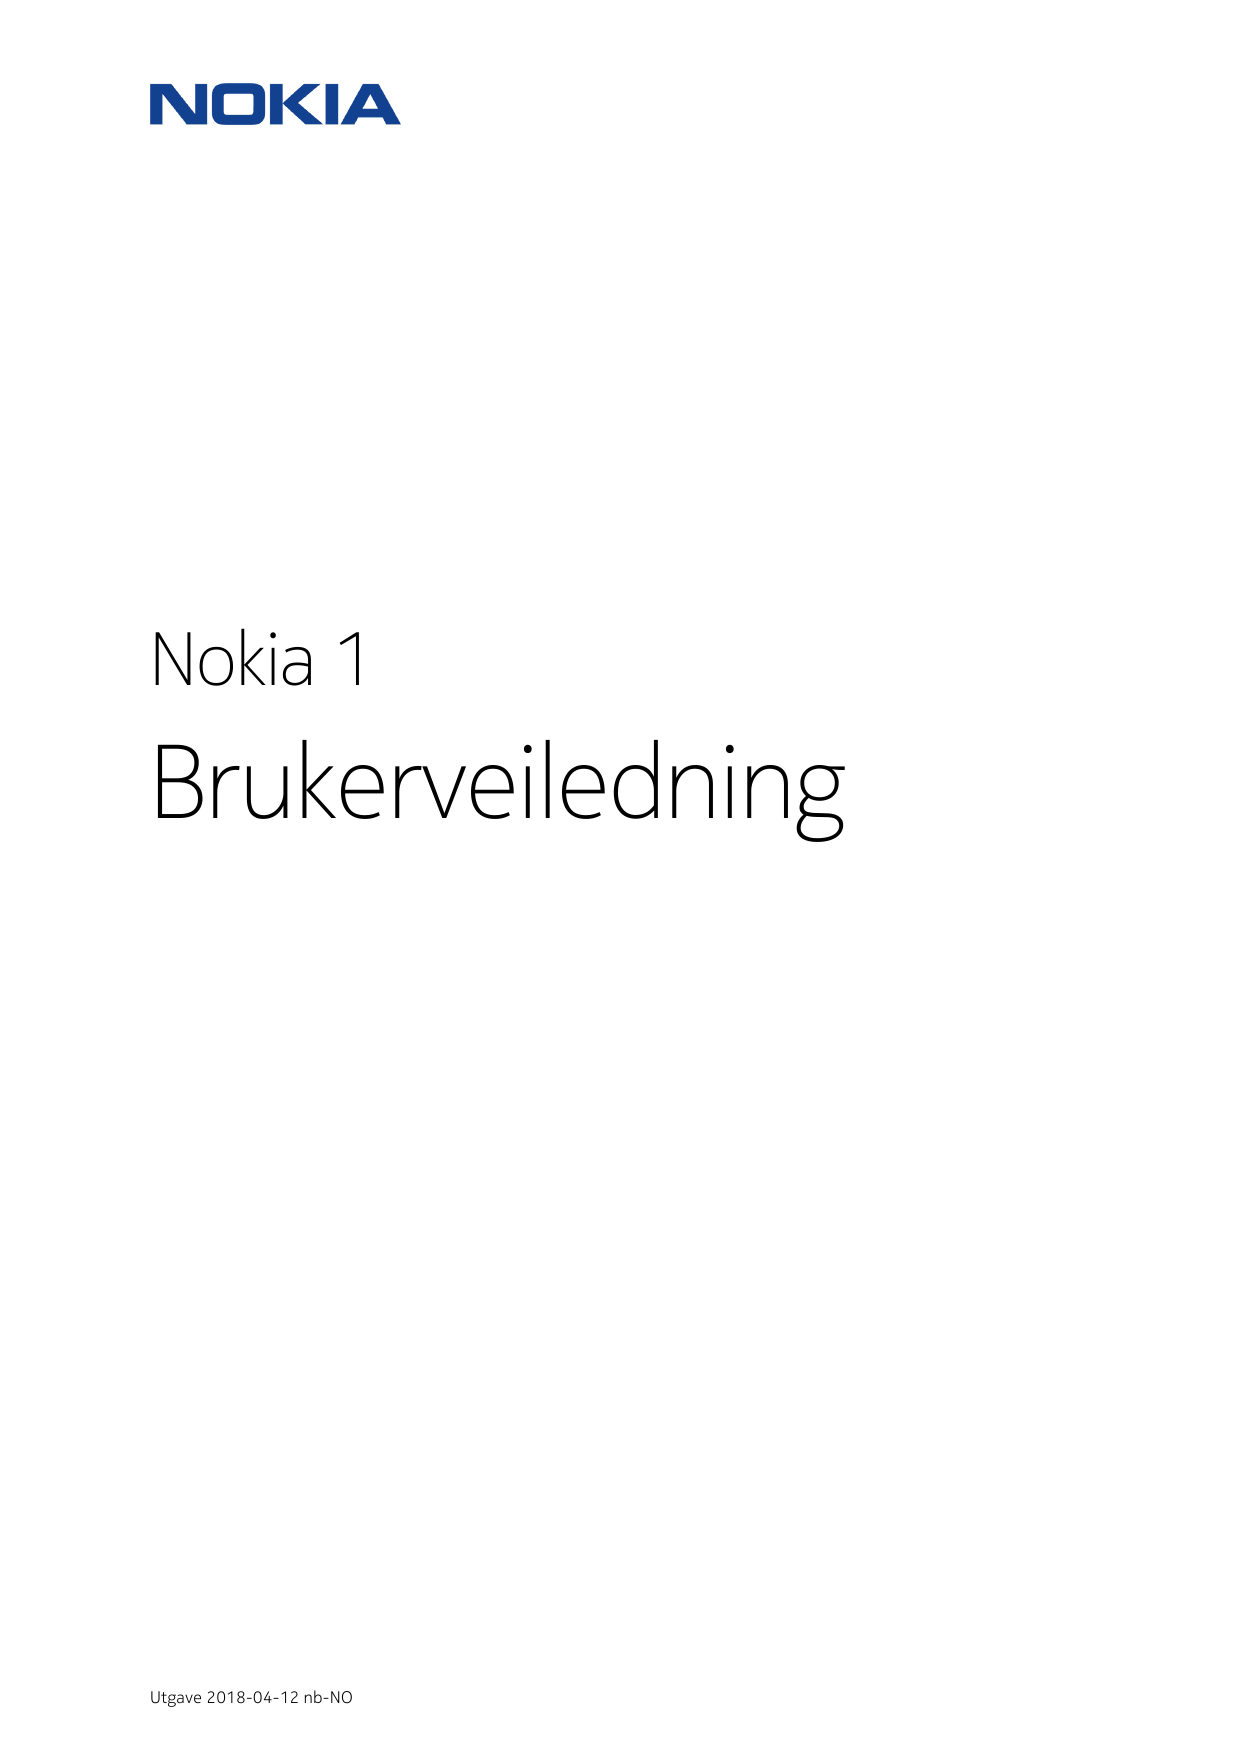 Nokia 1BrukerveiledningUtgave 2018-04-12 nb-NO